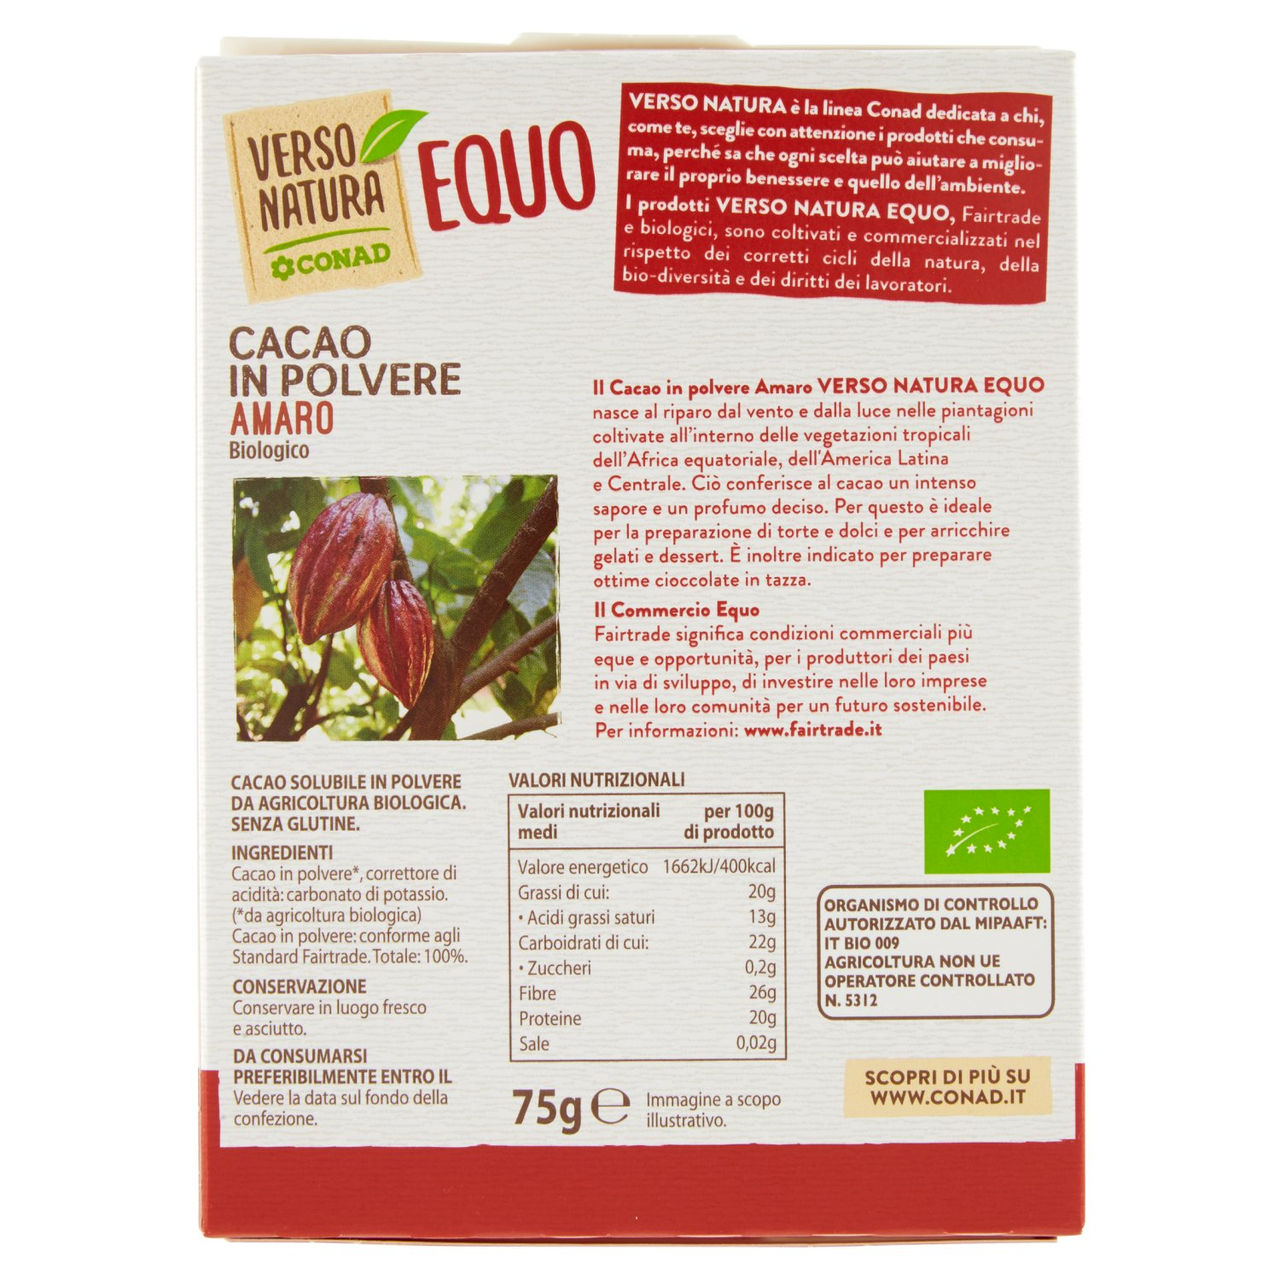 Cacao Amaro in Polvere Biologico g 75 Conad